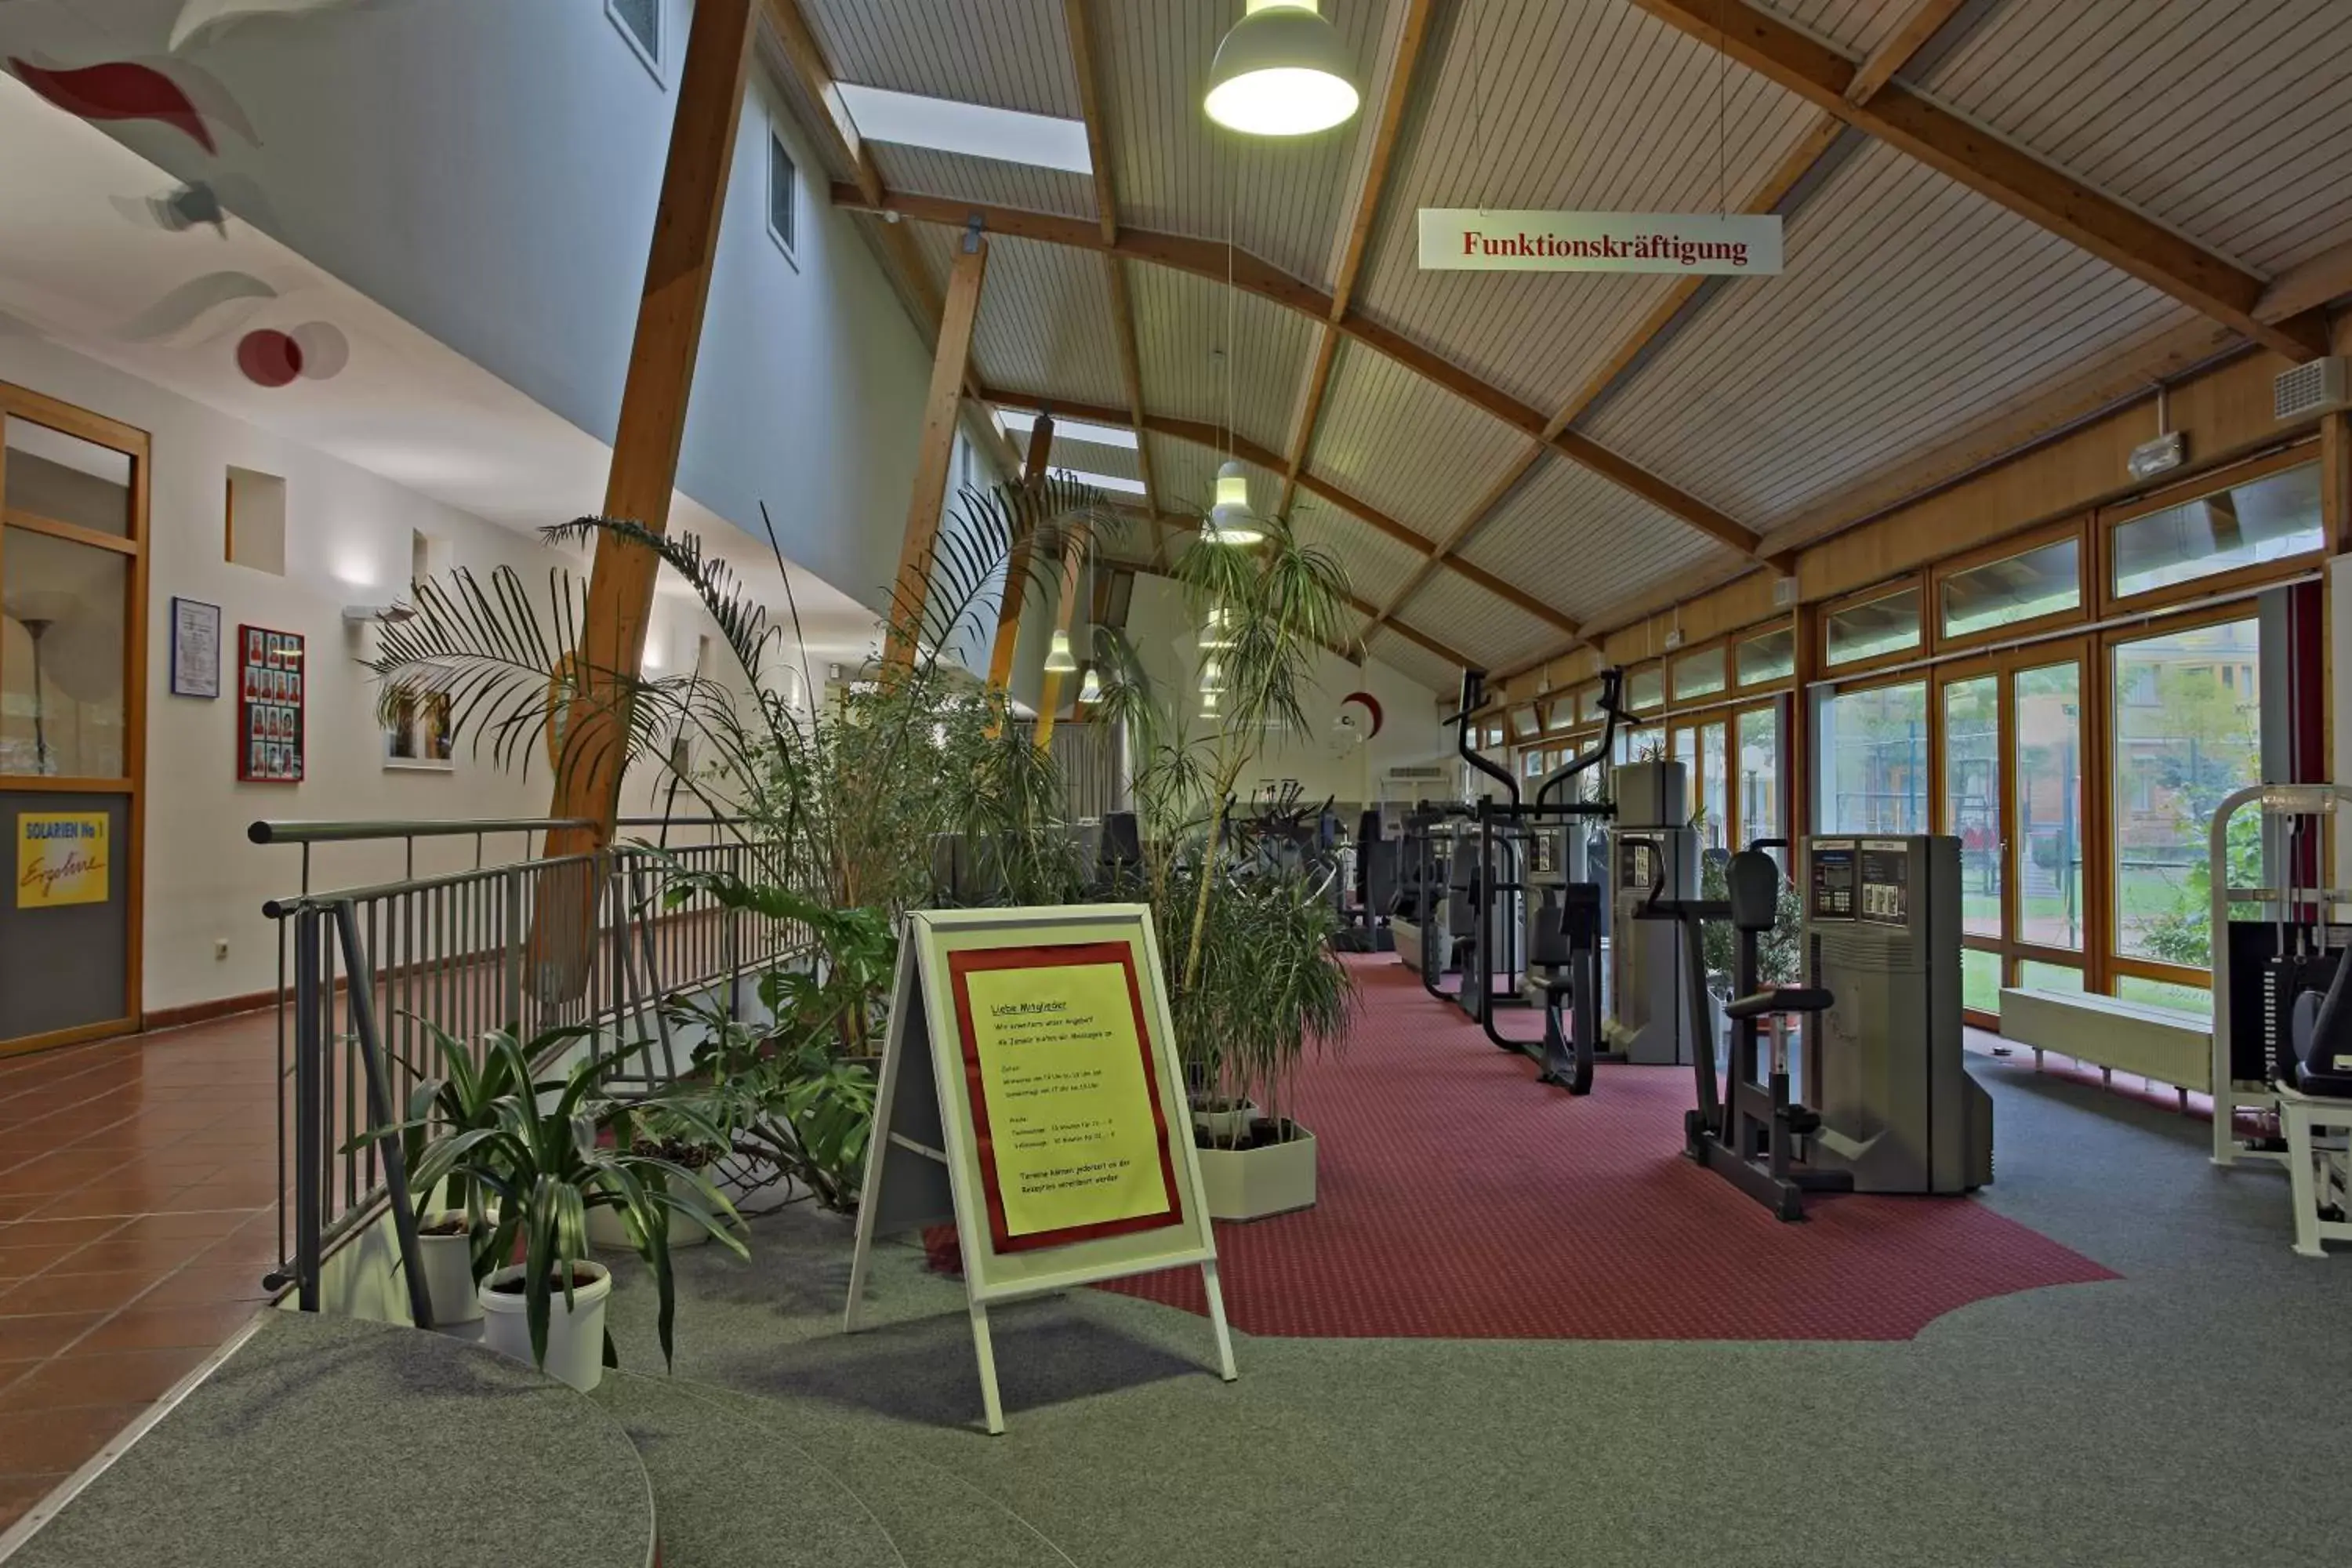 Fitness centre/facilities, Fitness Center/Facilities in Best Western Hotel Braunschweig Seminarius